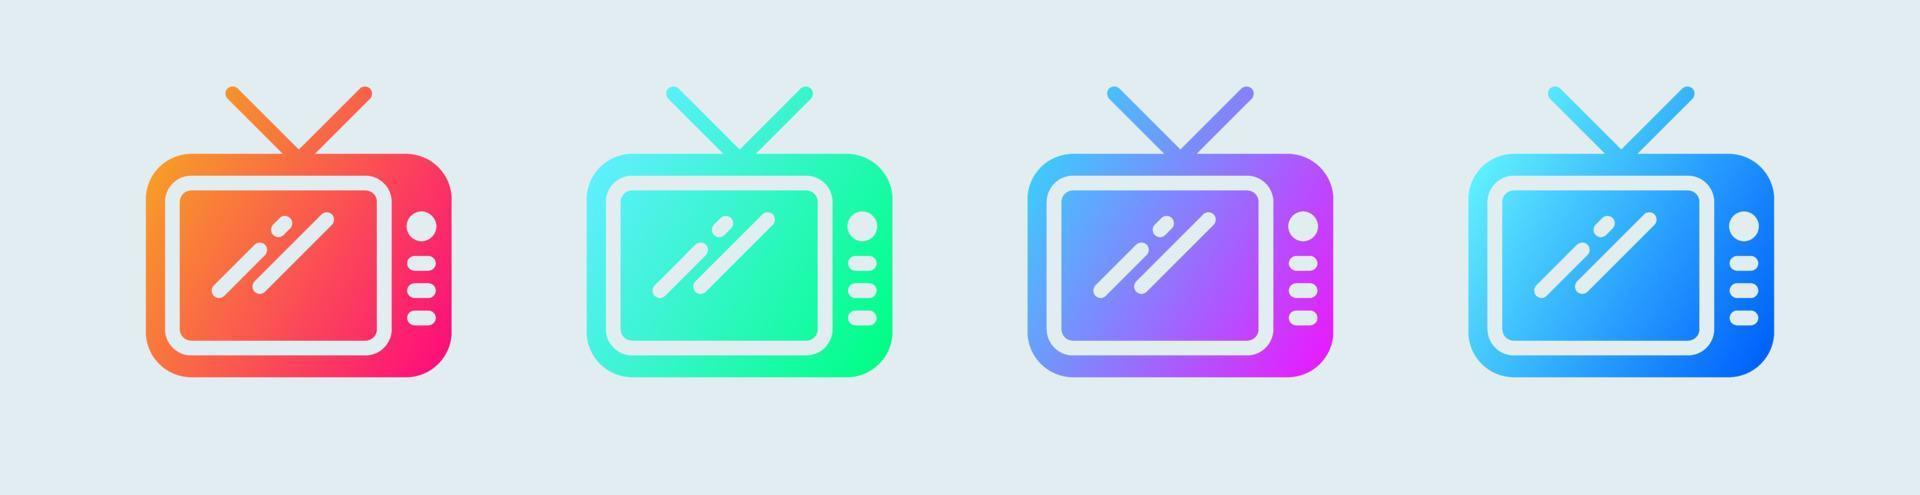 Tv solid icon in gradient colors. Retro tv signs vector illustration.